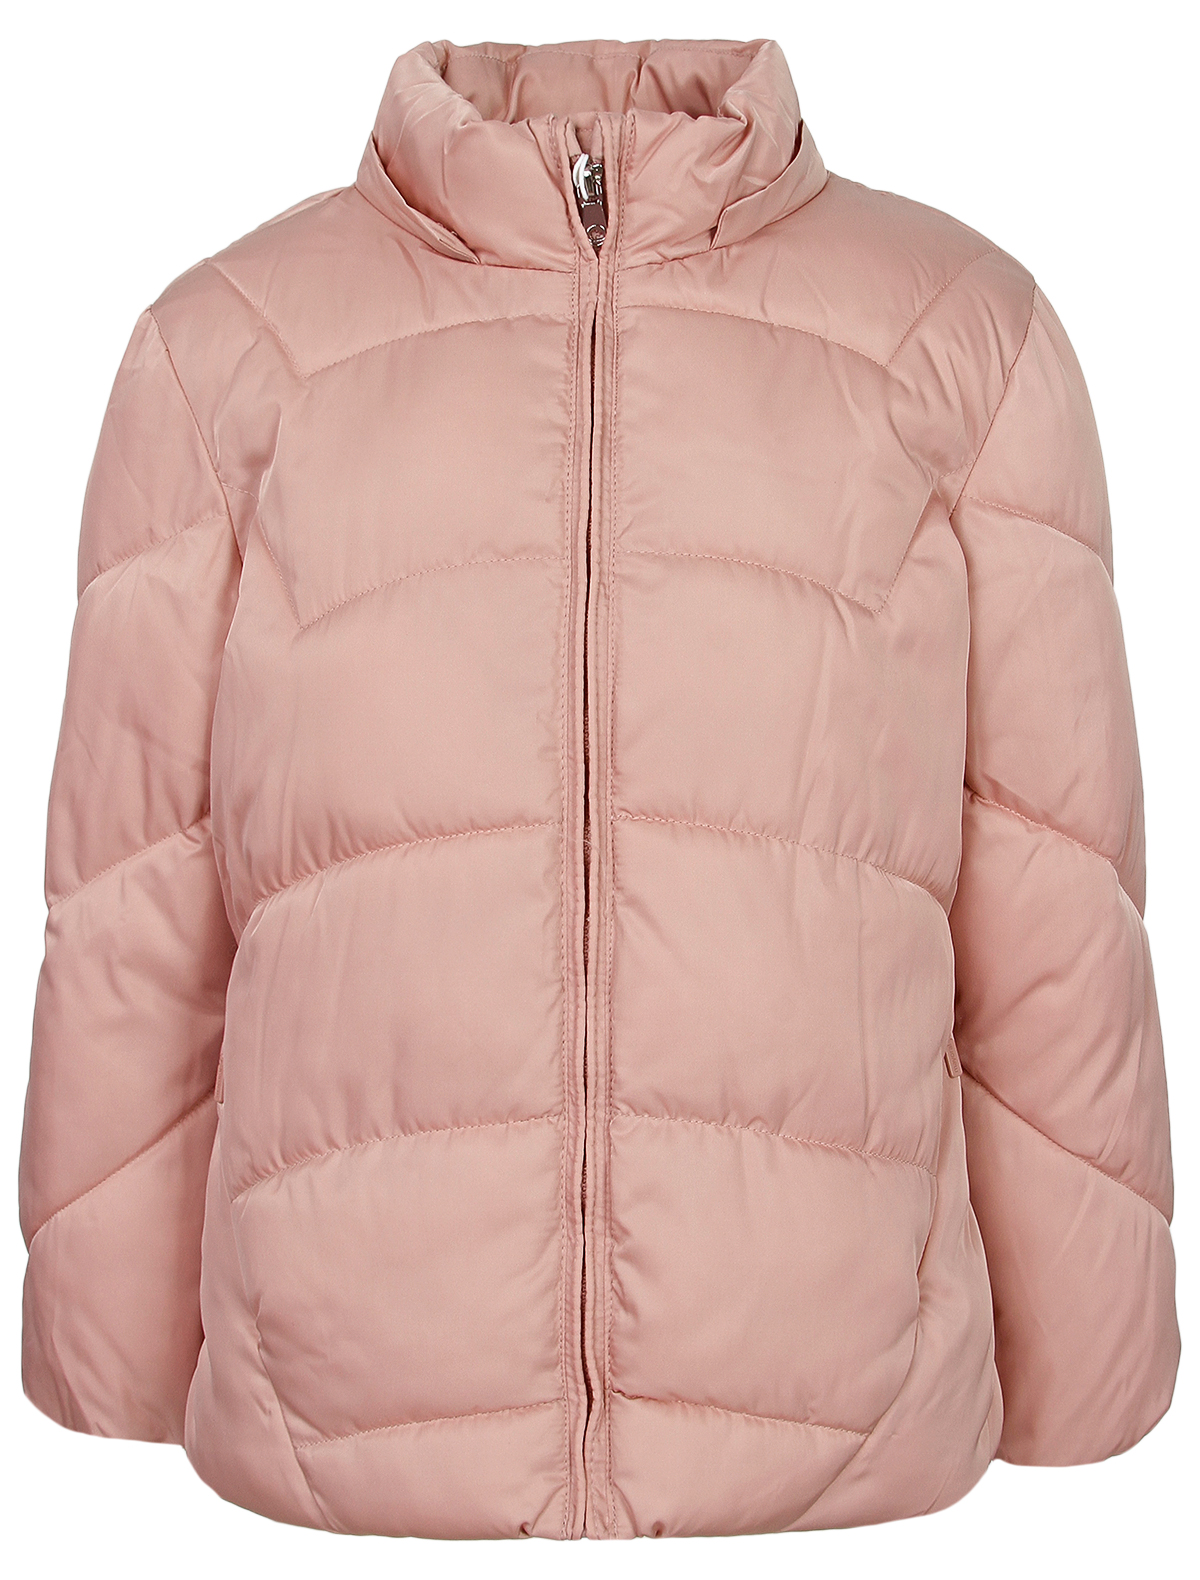 Куртка Mayoral 2490983, цвет розовый, размер 3 1074509282150 - фото 4